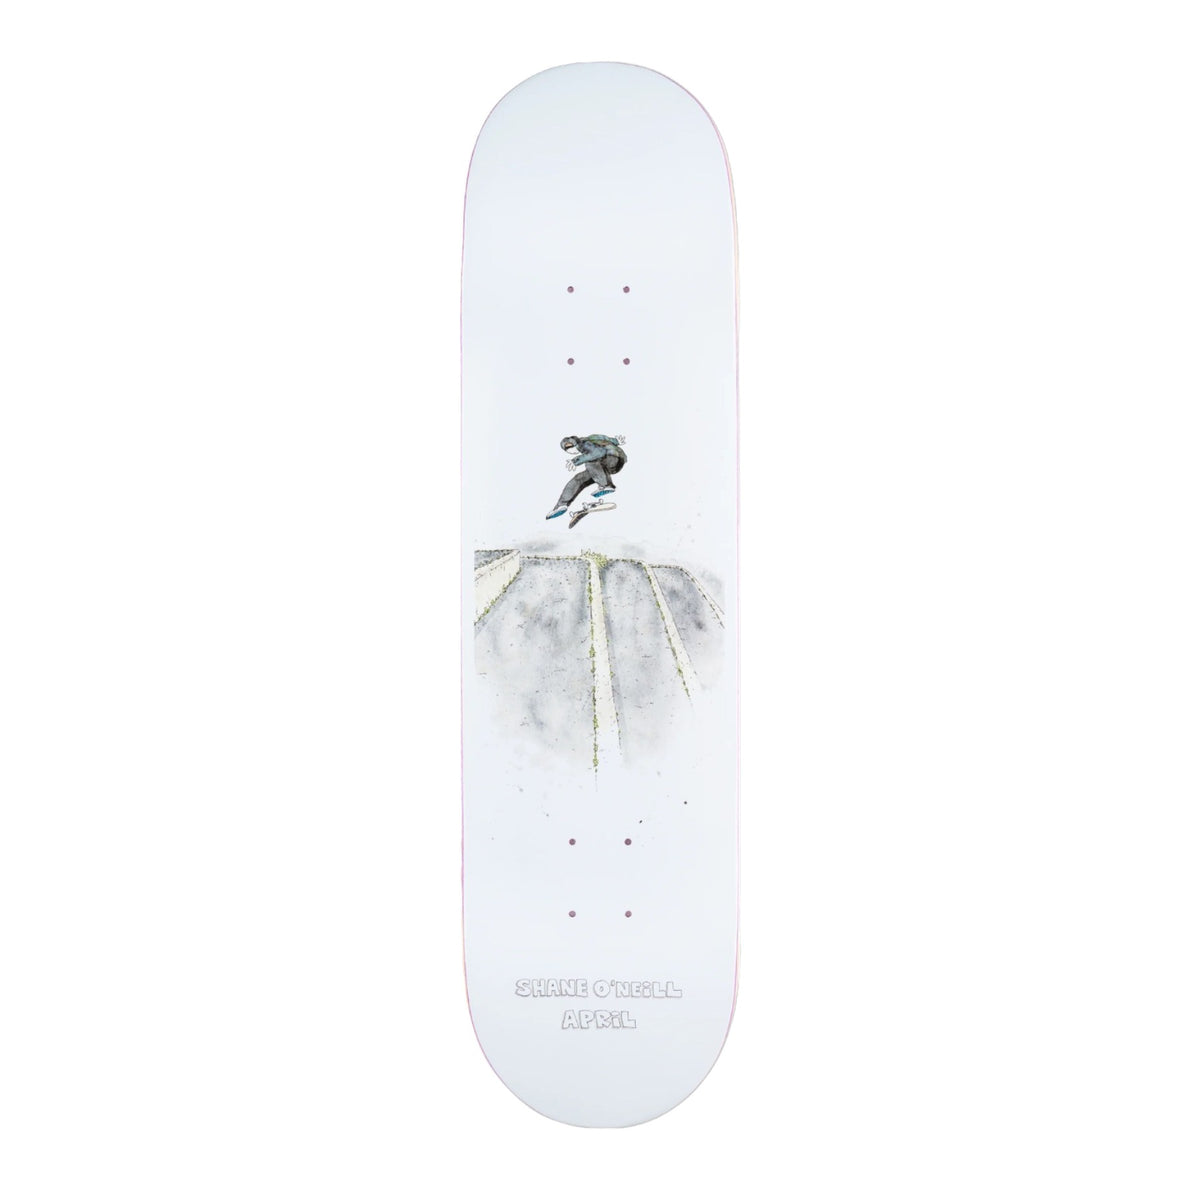 April Shane O'Neill Wallenberg Skateboard Deck - 8.125